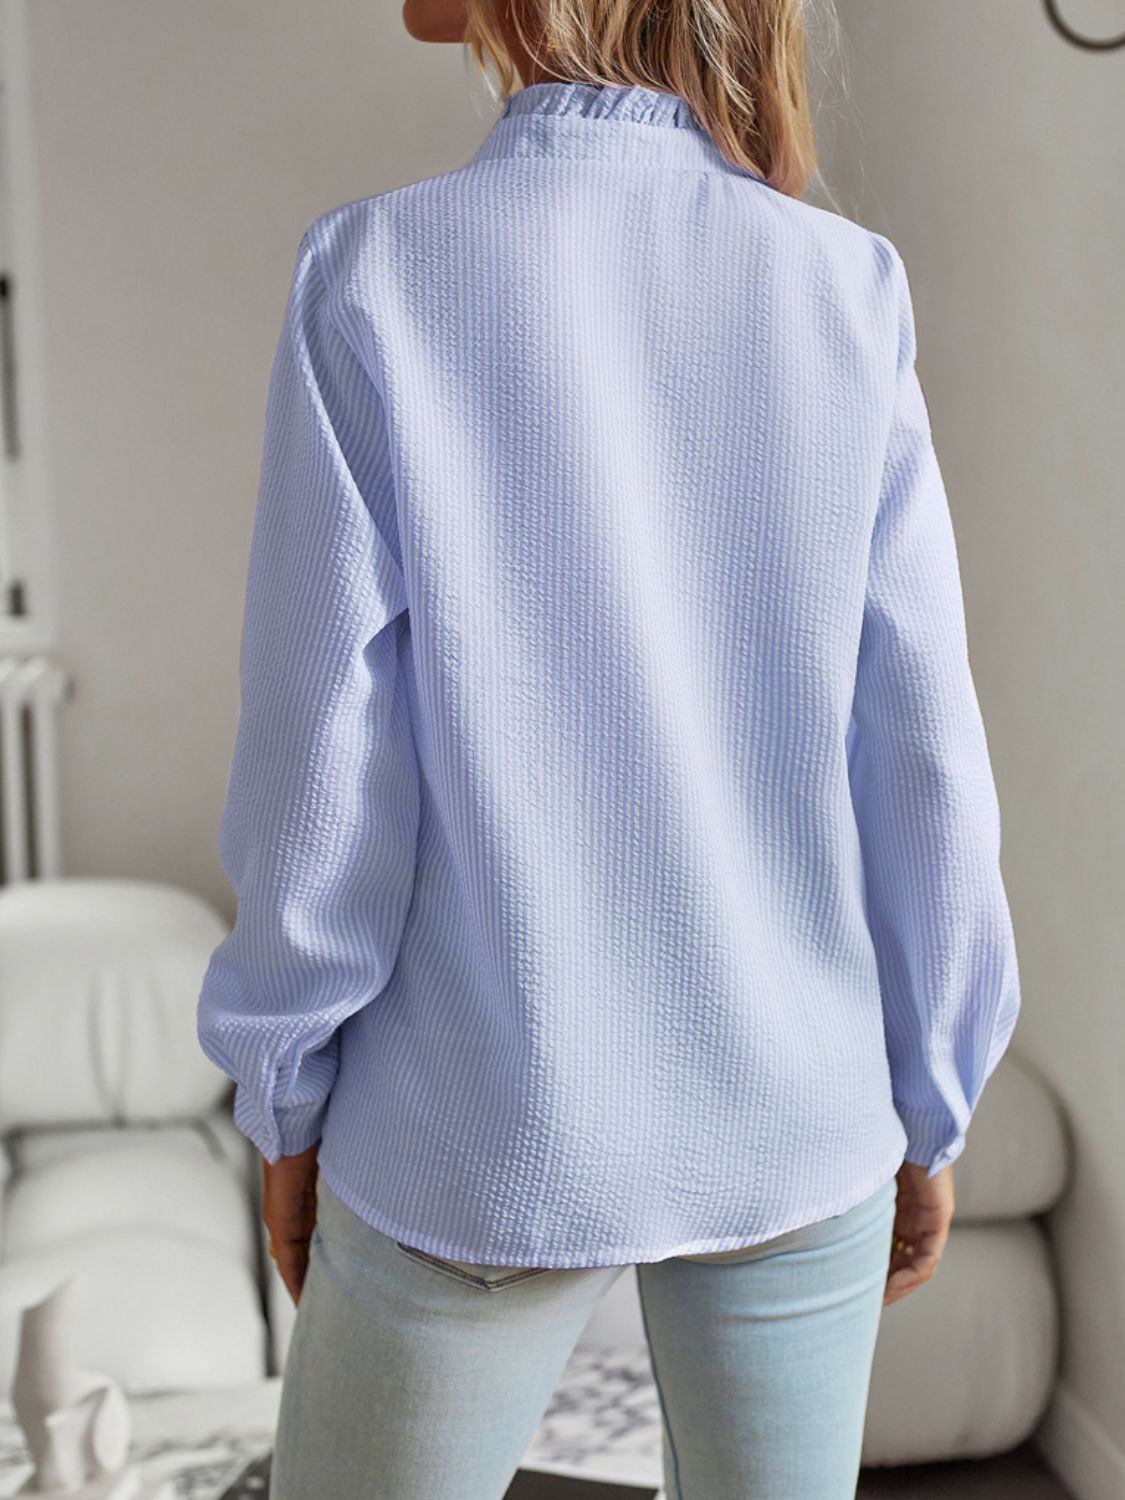 Ruffle Trim Long Sleeve Shirt - Misty Blue / S